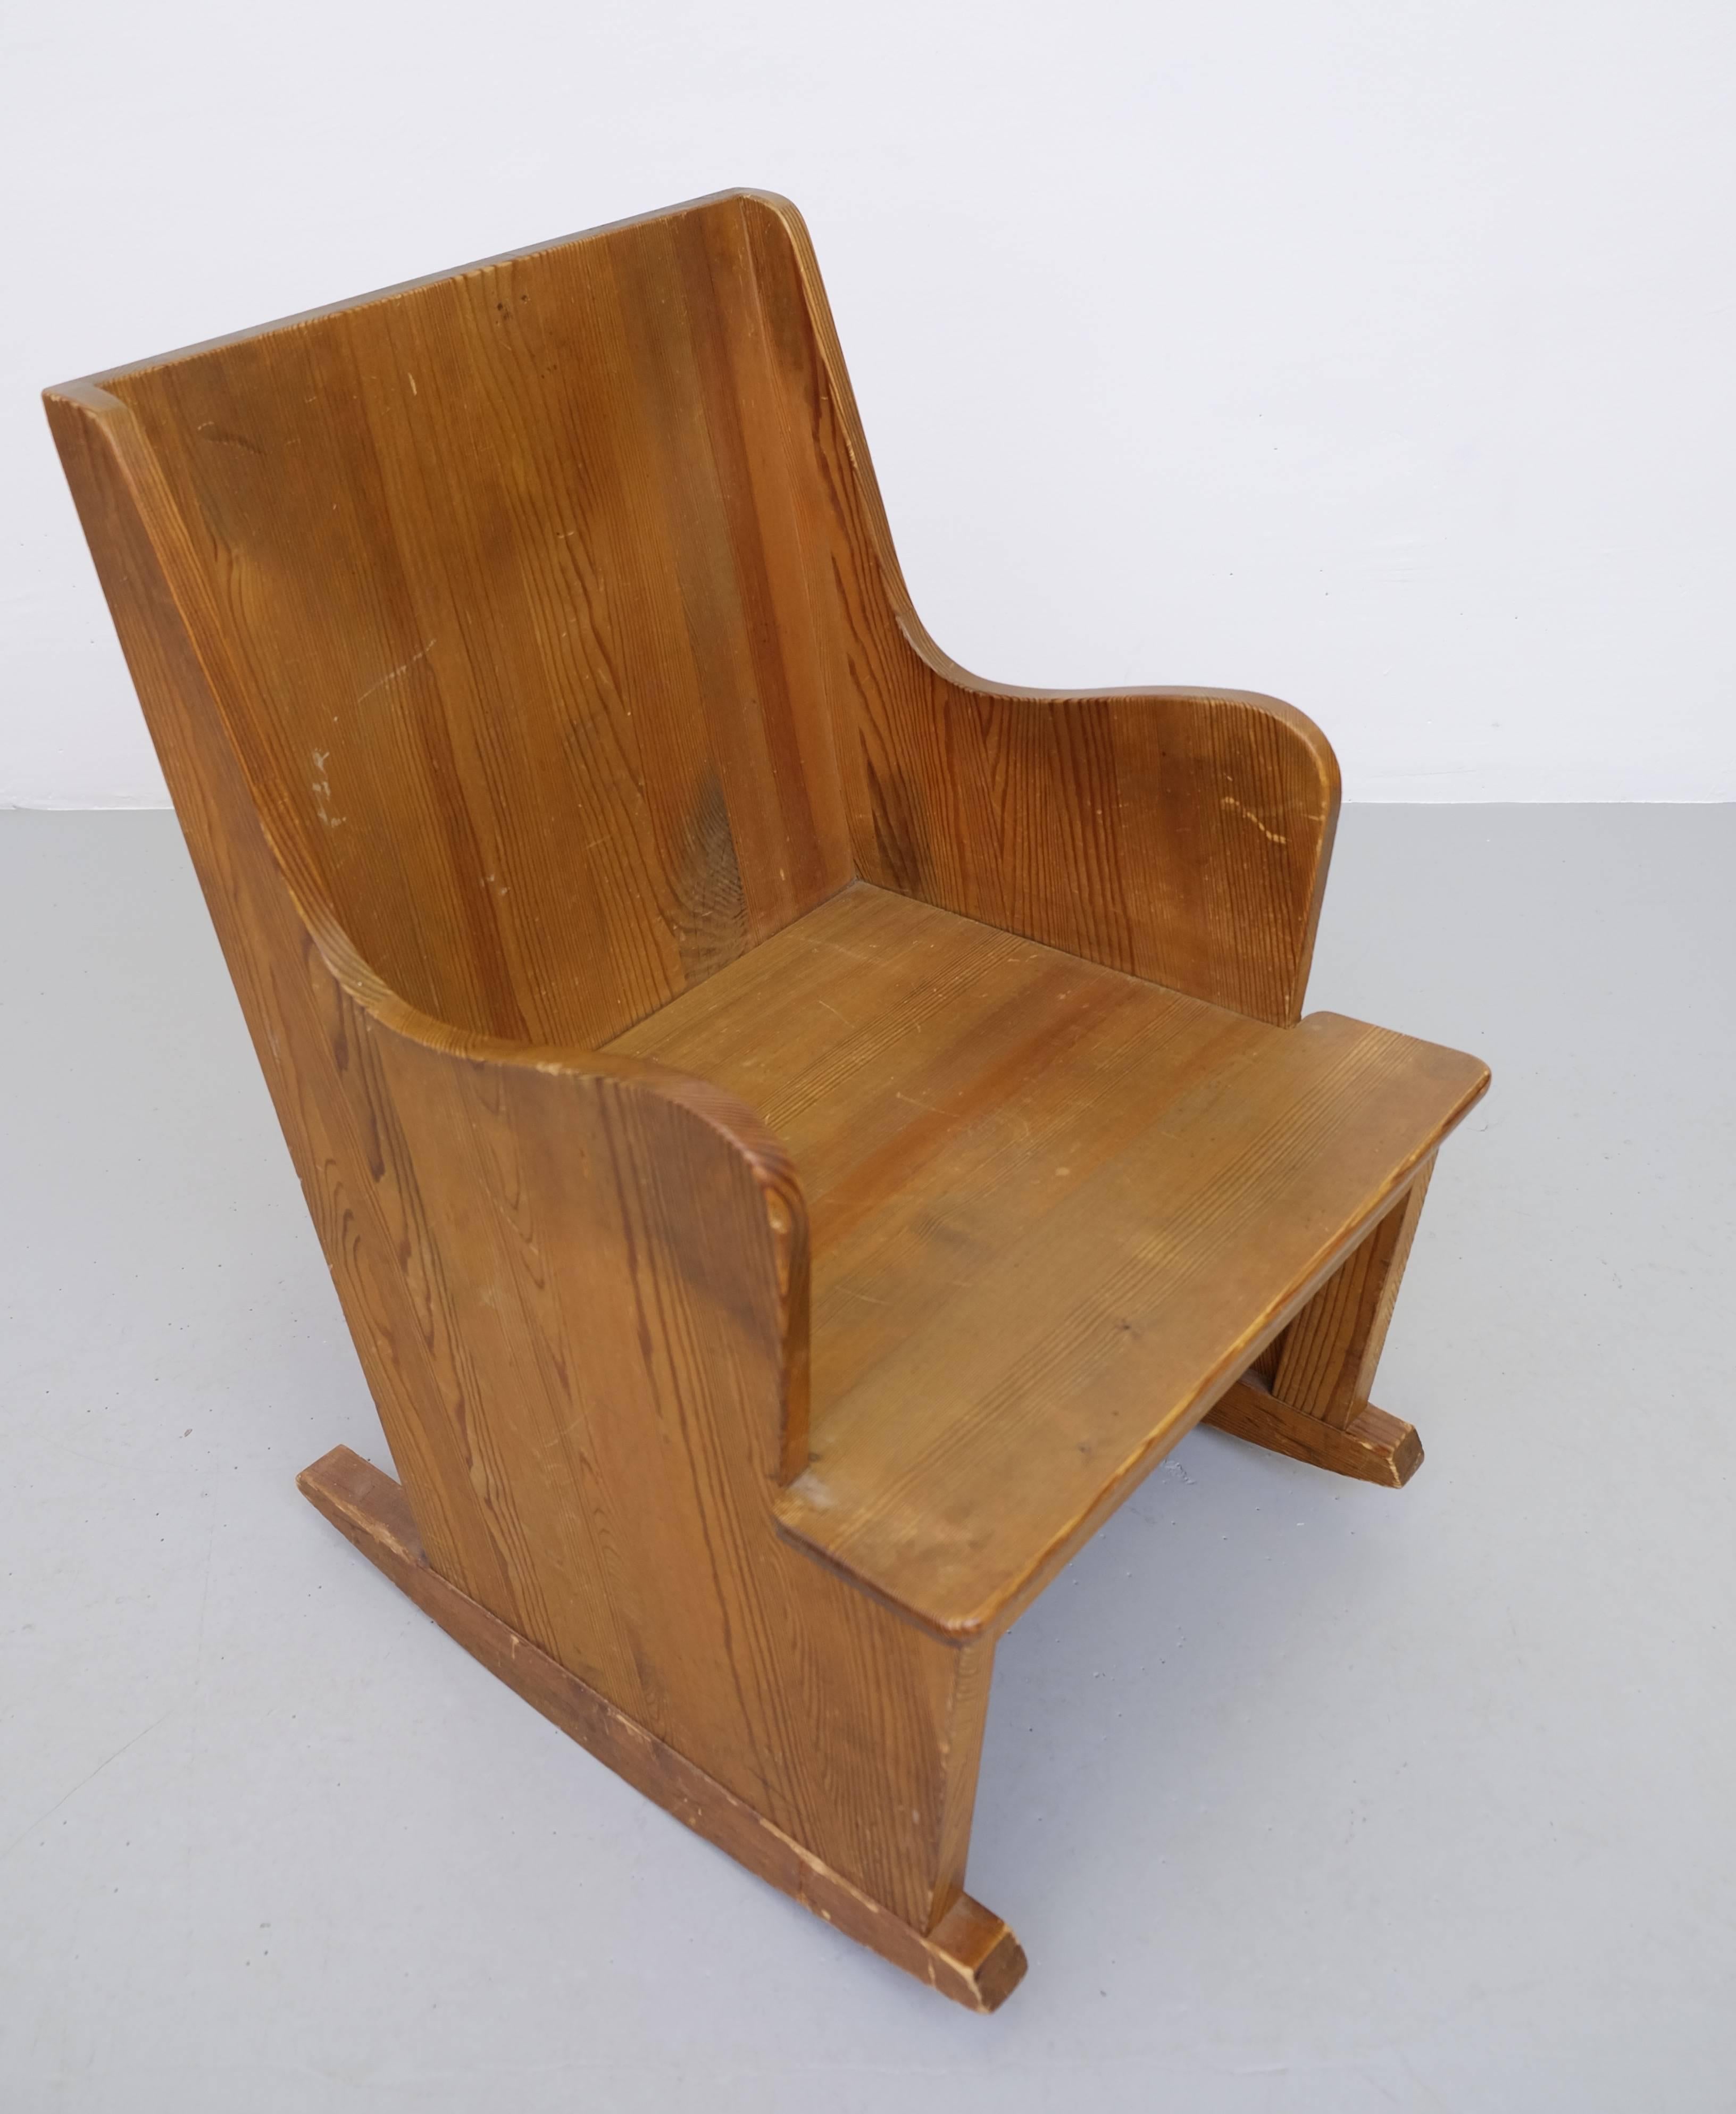 Scandinavian Modern Axel-Einar Hjorth 'Lovö' Rocking Chair for Nordiska Kompaniet, 1930s